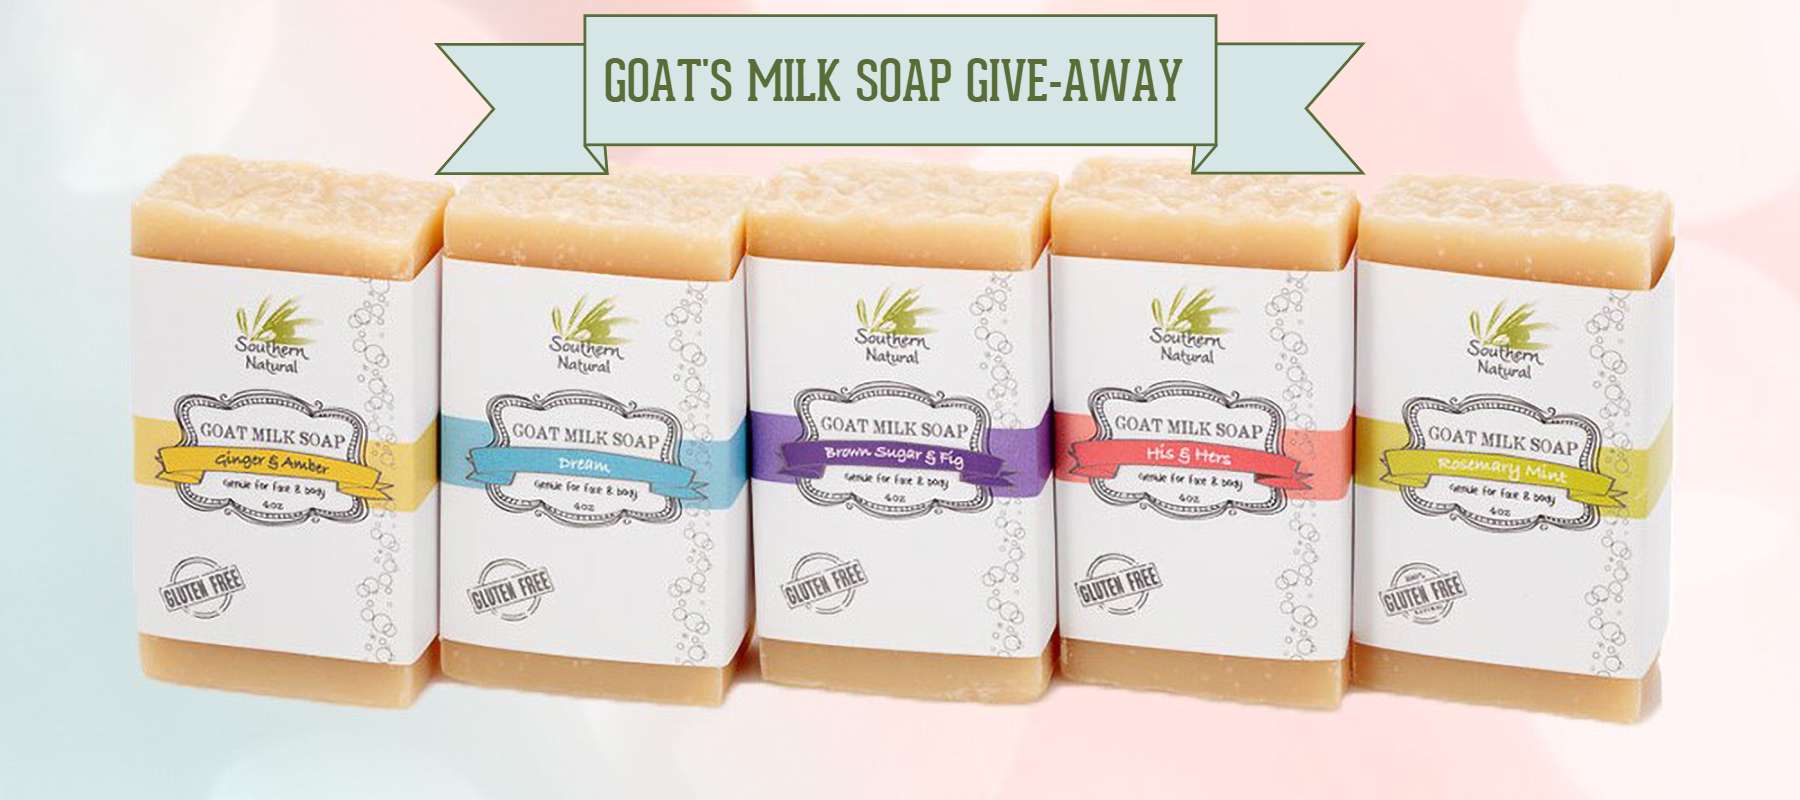 Win Free Goat's Milk Soap